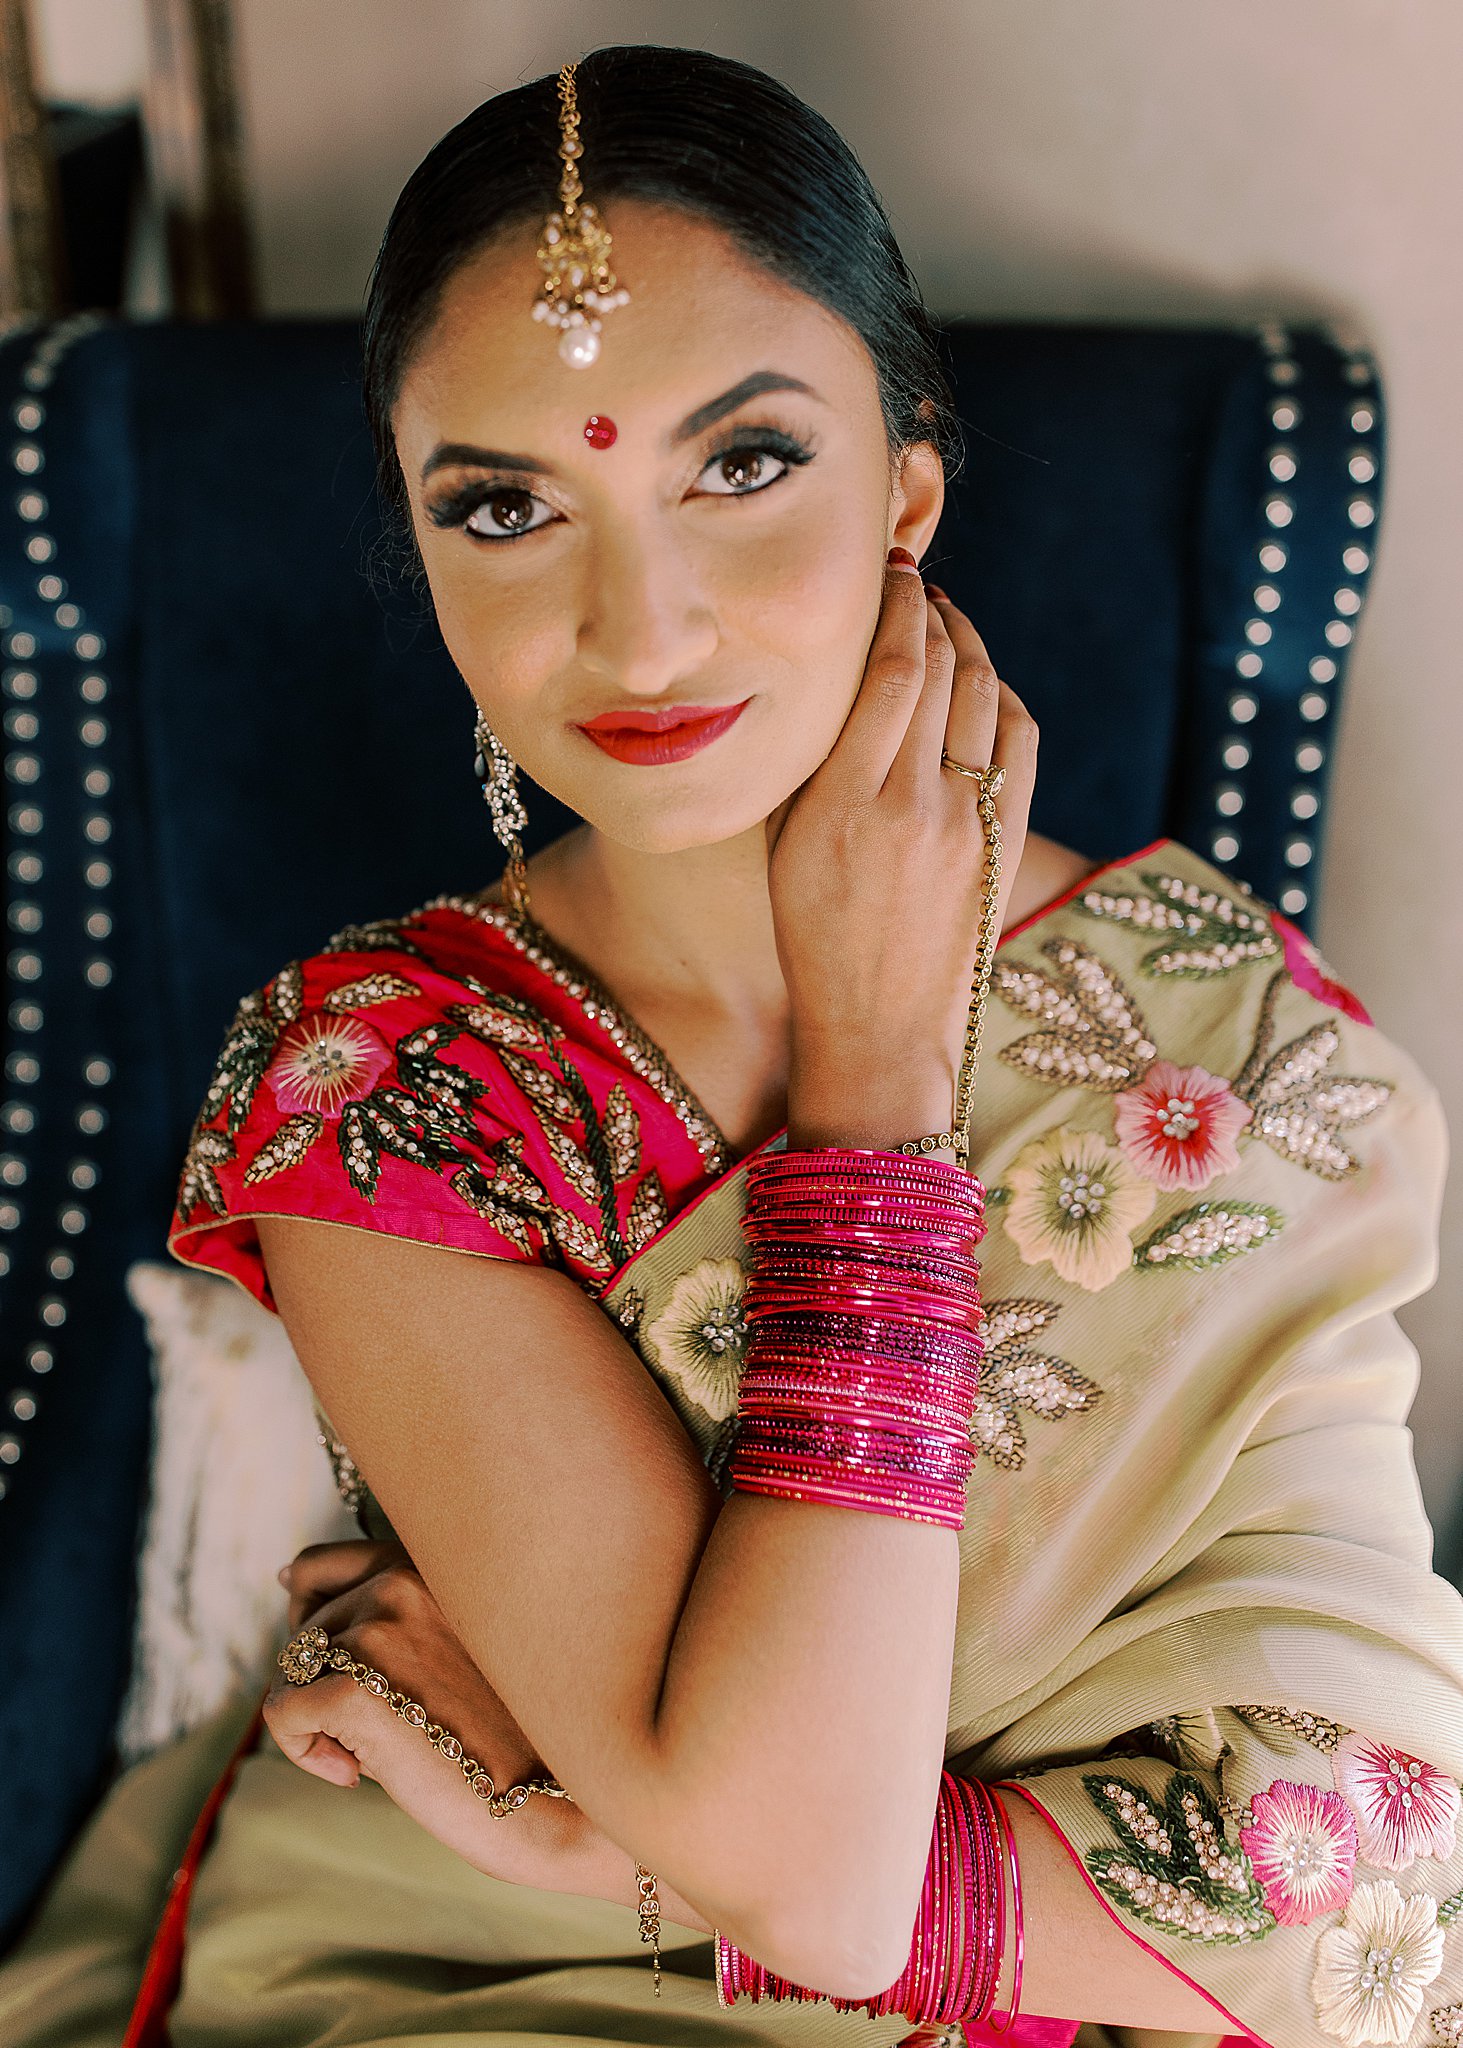 Beautiful Indian bride wearing hot pink wedding lehenga and bangles in blue velvet chair